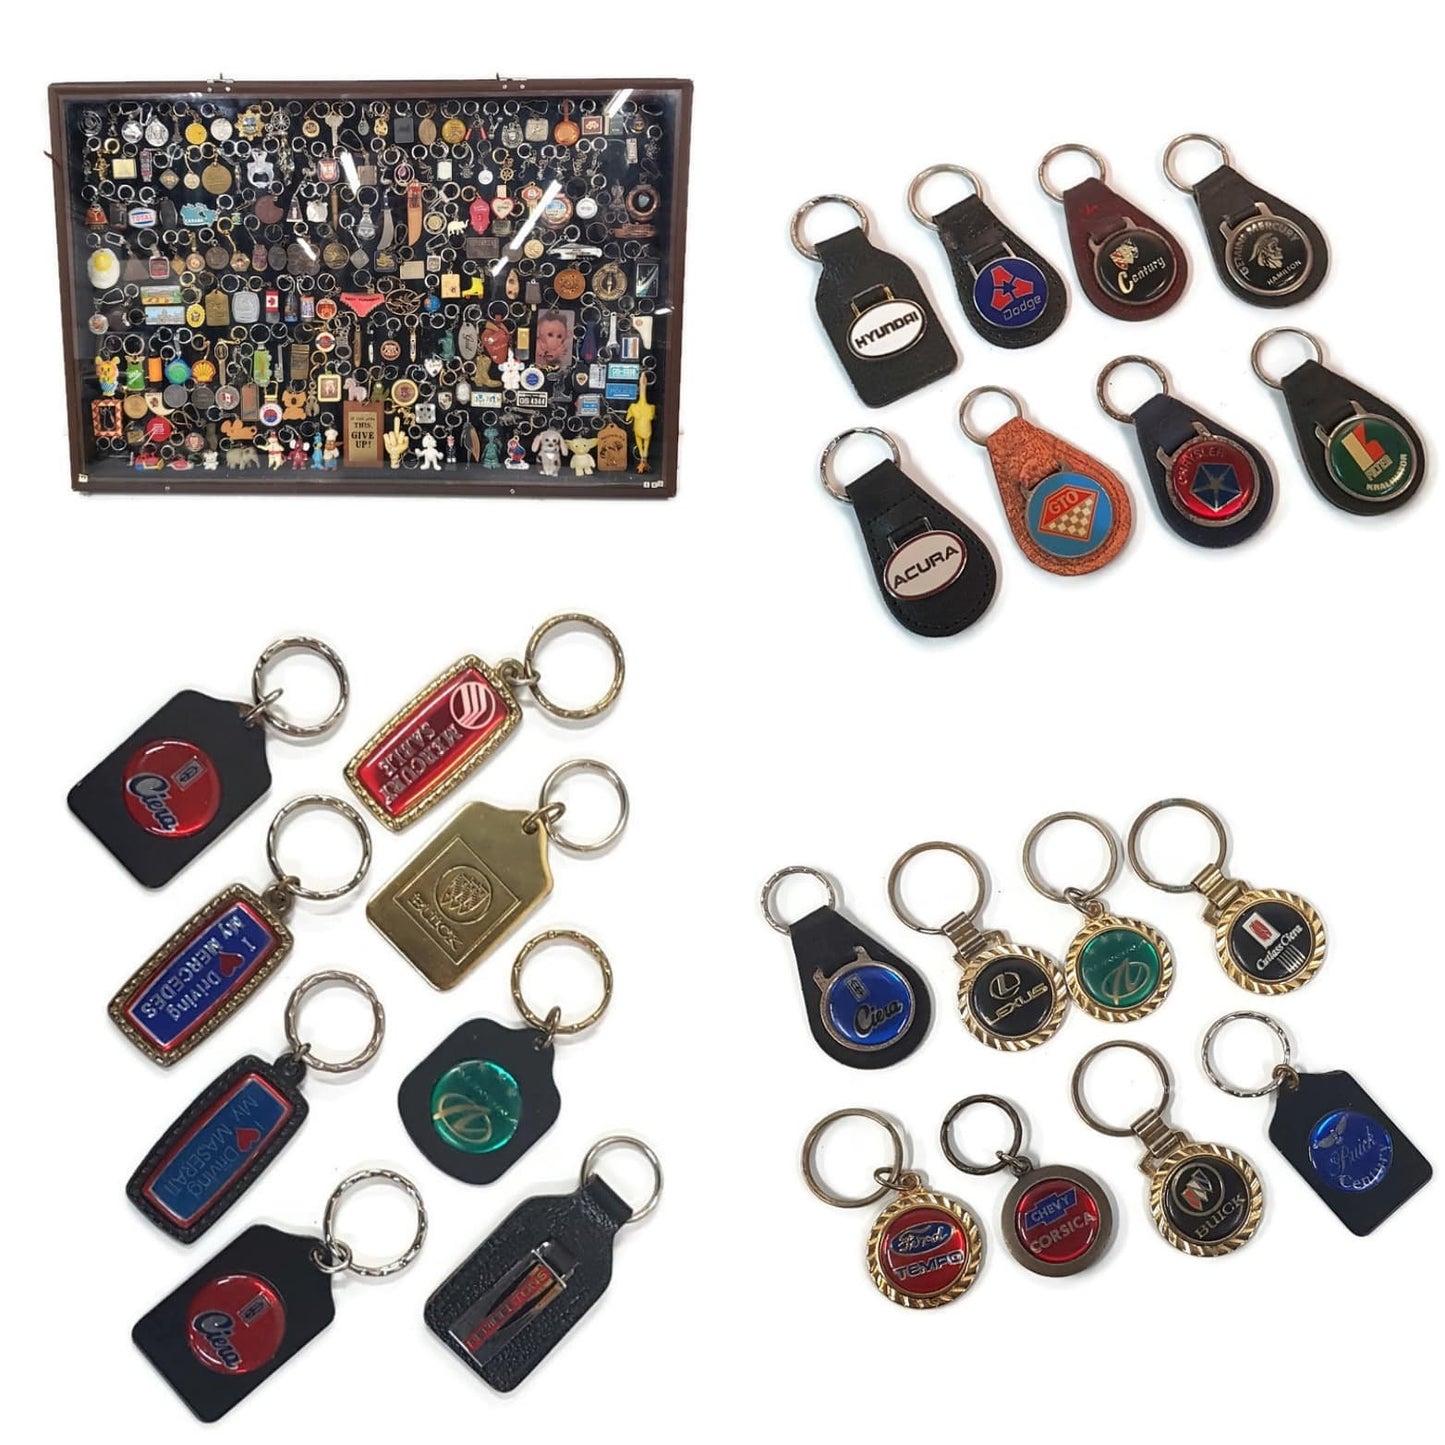 buick century key chain keychain key fob keytag vintage automotove keychain gift collectible